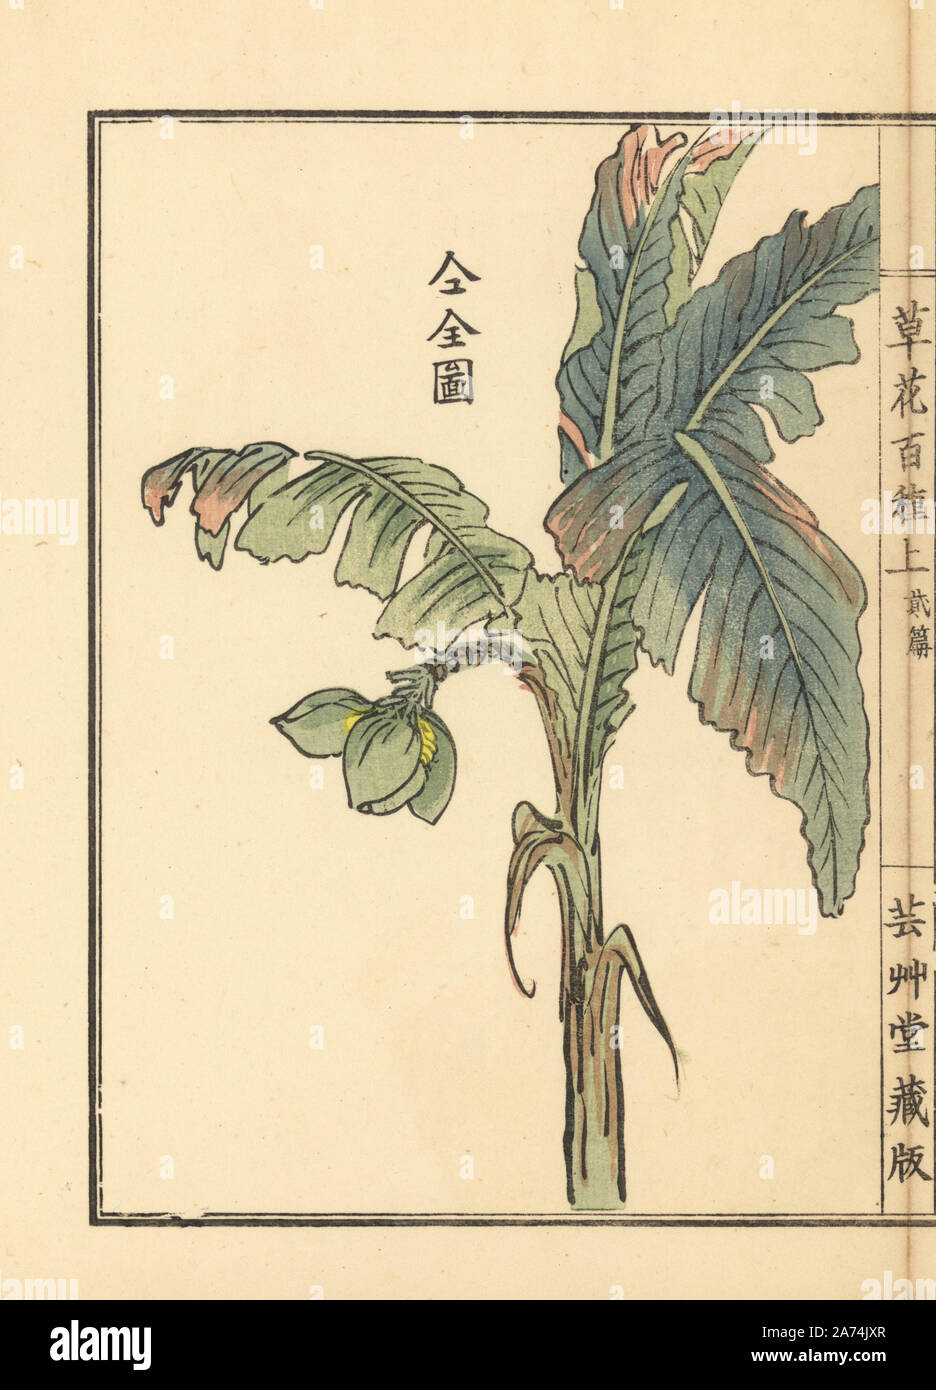 Bashou or Japanese banana tree, Musa basjoo. Handcoloured woodblock print by Kono Bairei from Kusa Bana Hyakushu (One Hundred Varieties of Flowers), Tokyo, Yamada, 1901. Stock Photo